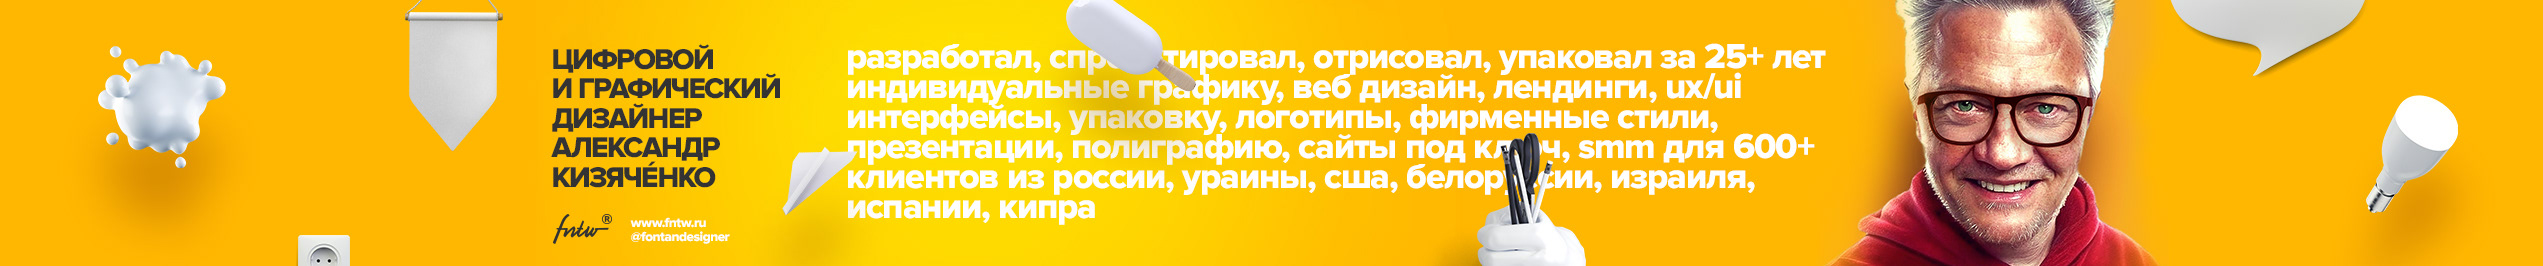 Bannière de profil de Alexander Kizyachenko